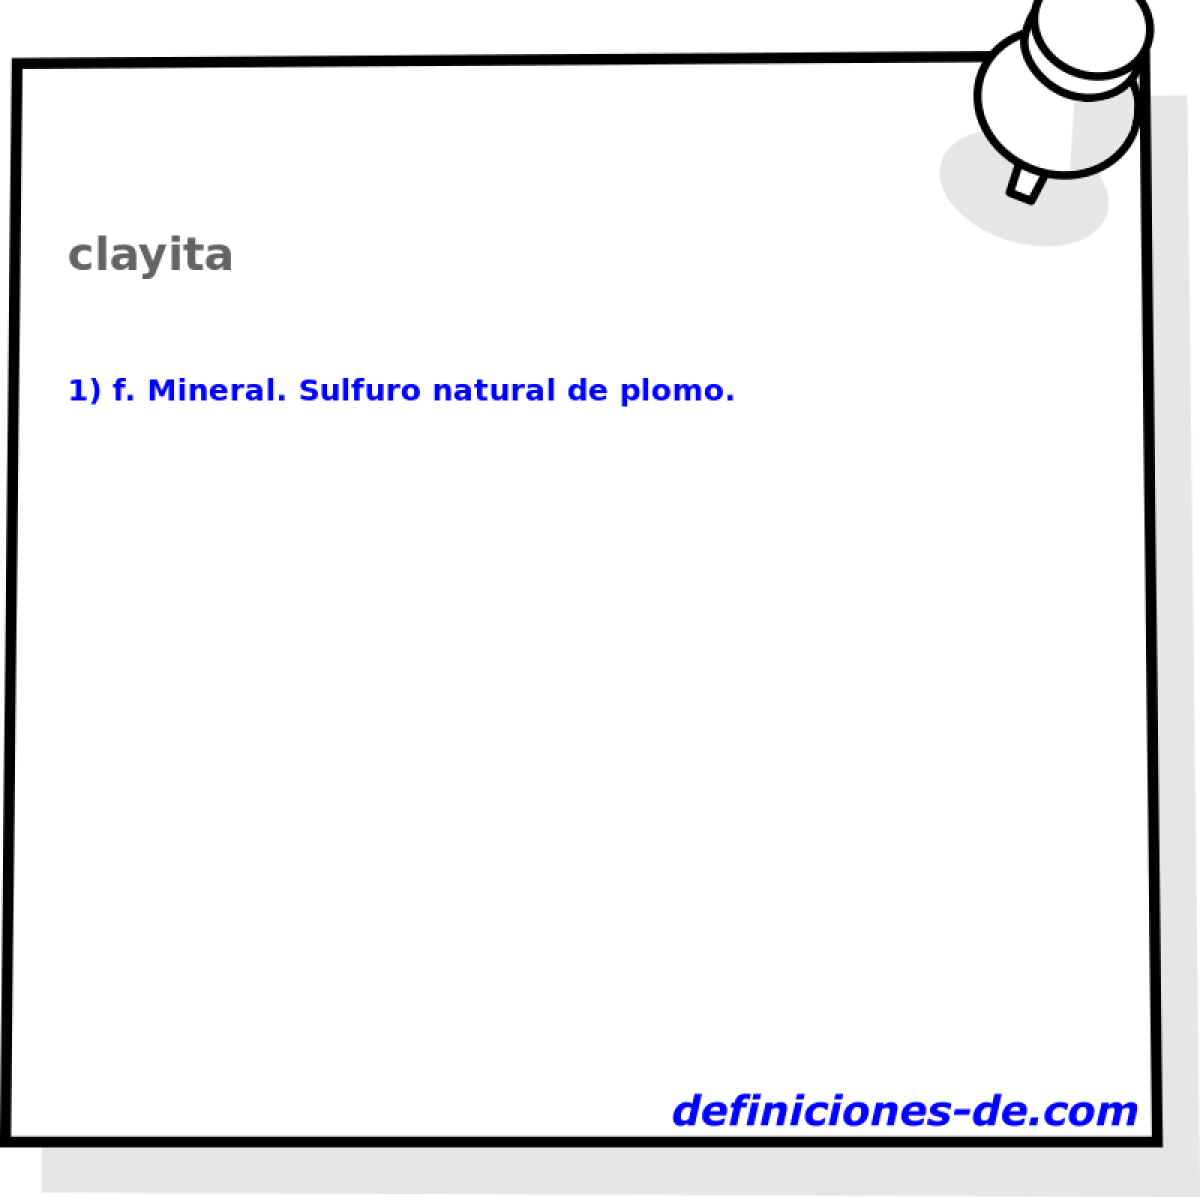 clayita 